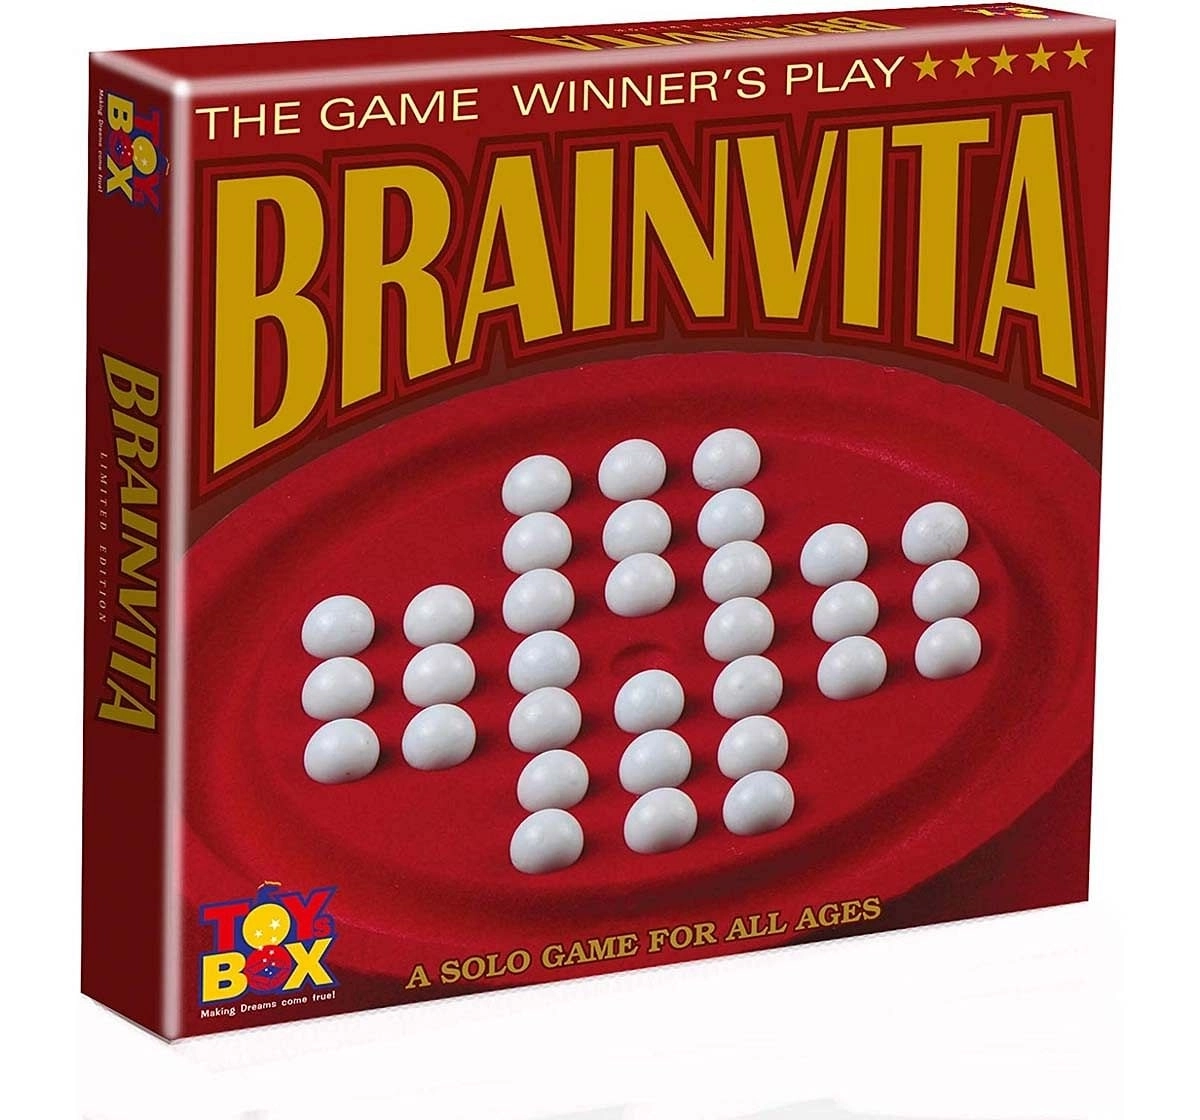 Toysbox Brainvita Single Player Board Games for Kids age 5Y+ 